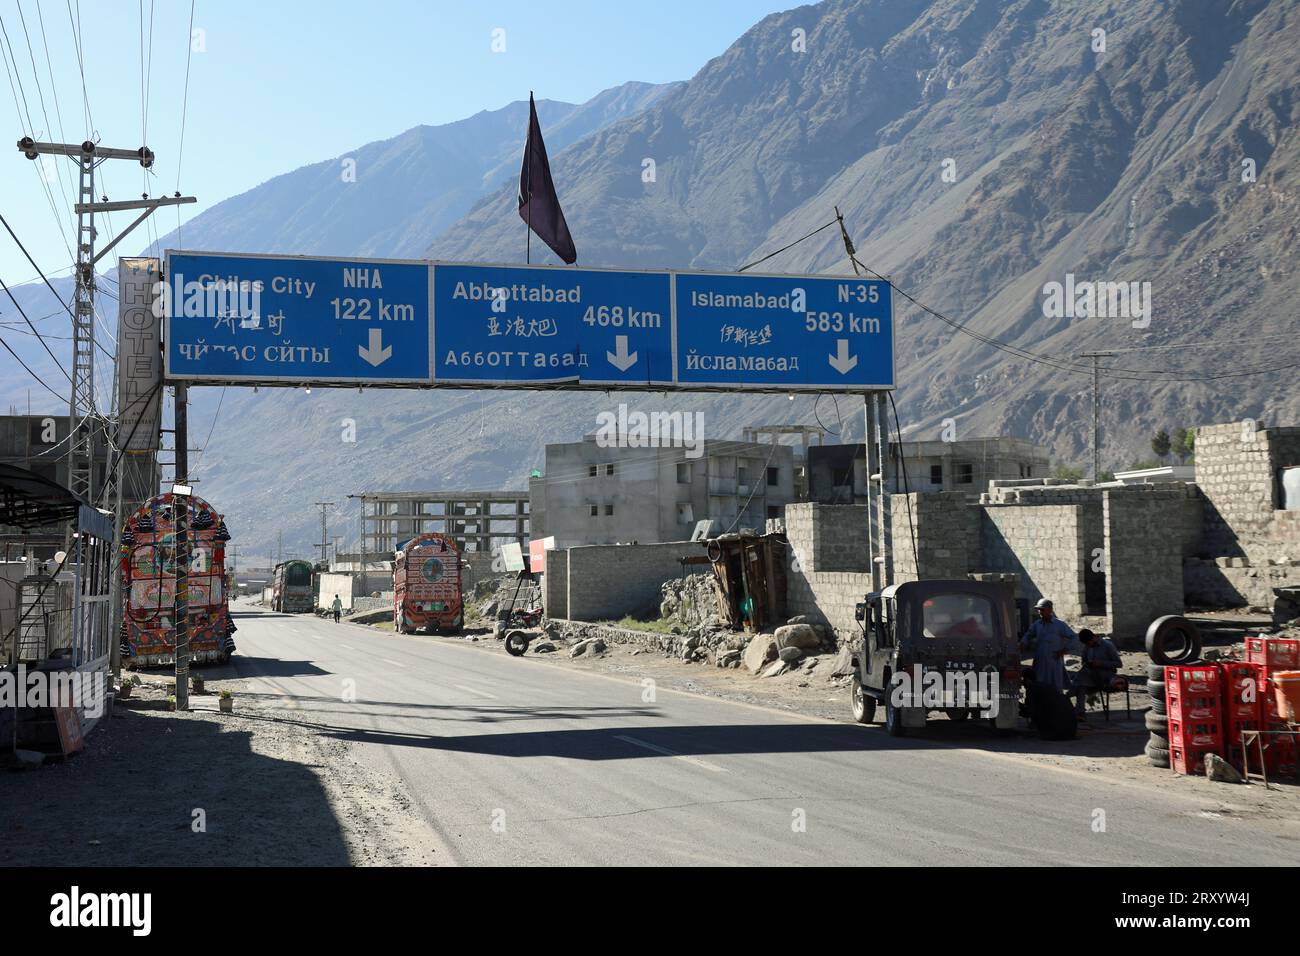 Indicazioni stradali sull'autostrada Karakoram a Gilgit Baltistan nel Pakistan settentrionale Foto Stock